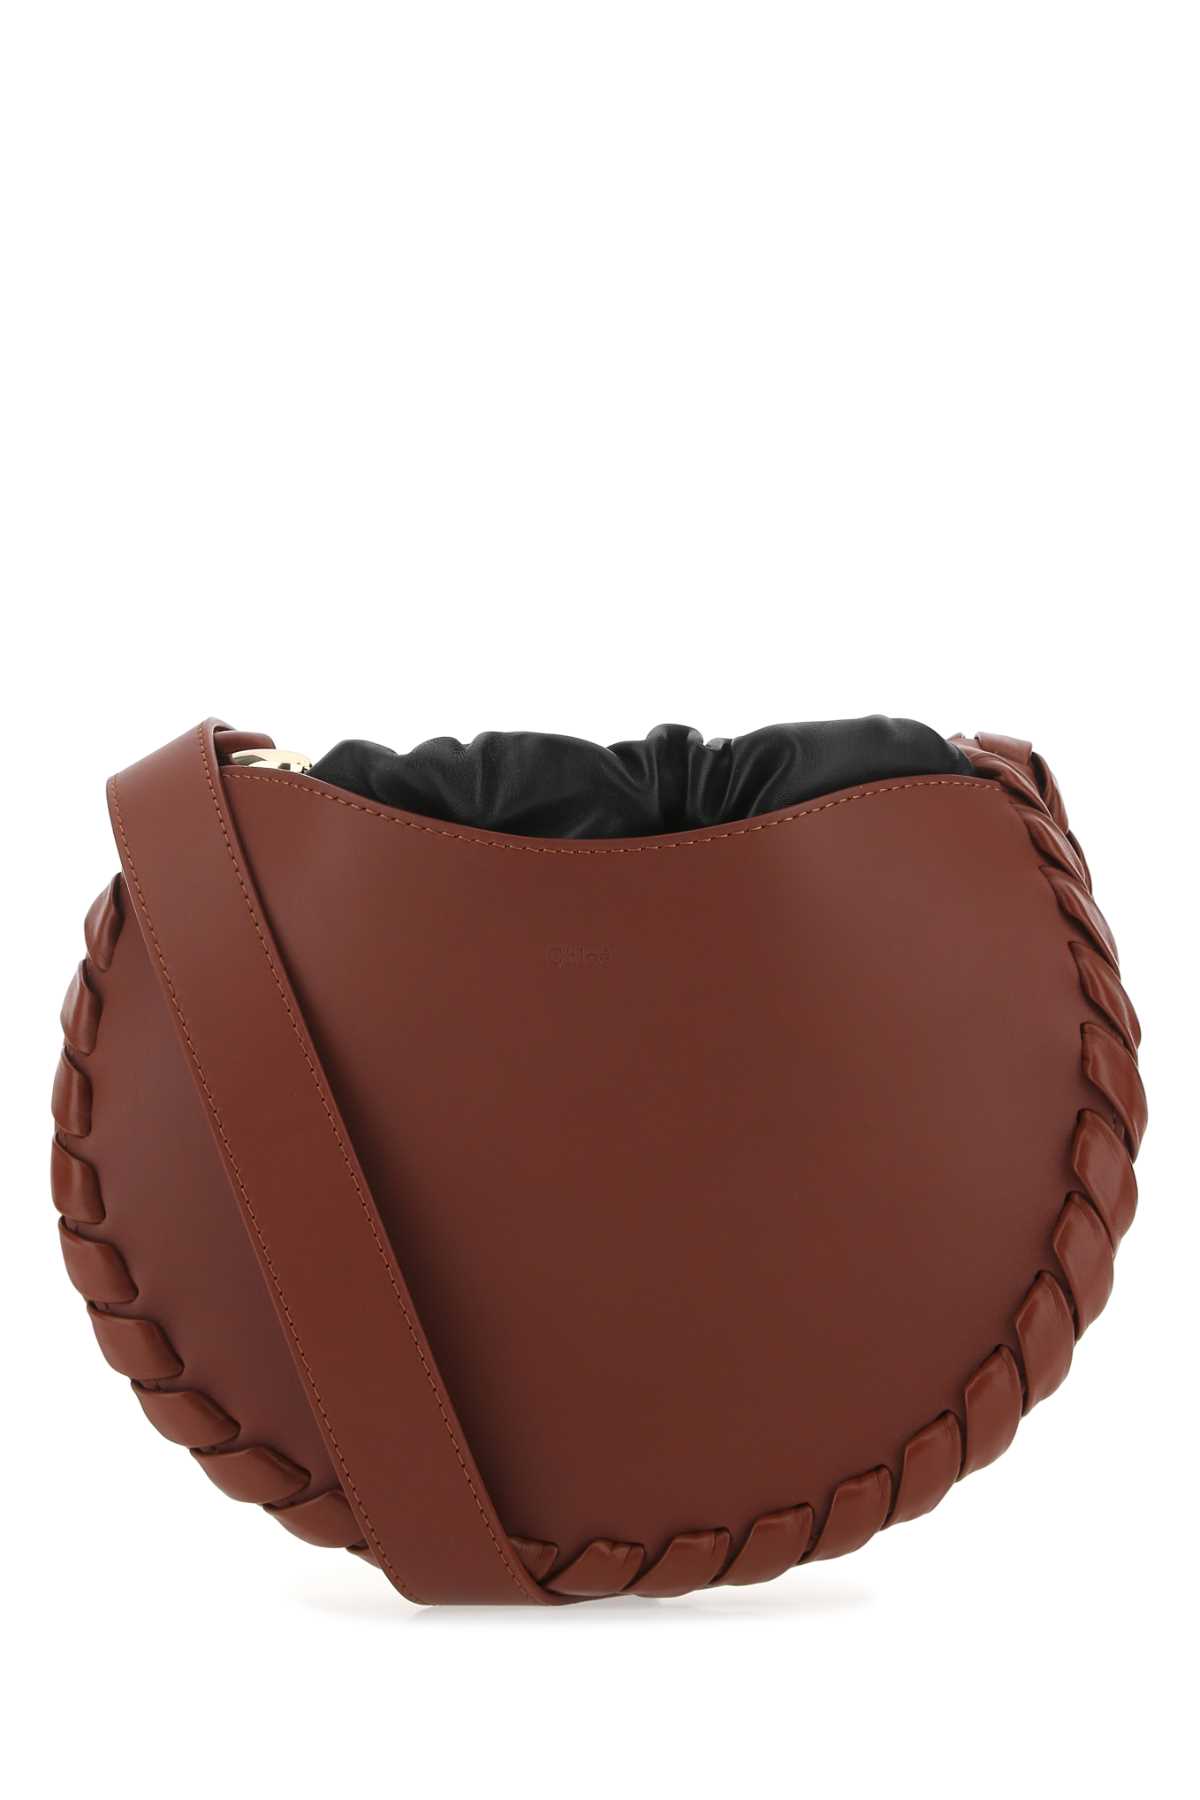 Chloé Brick Leather Small Mate Crossbody Bag